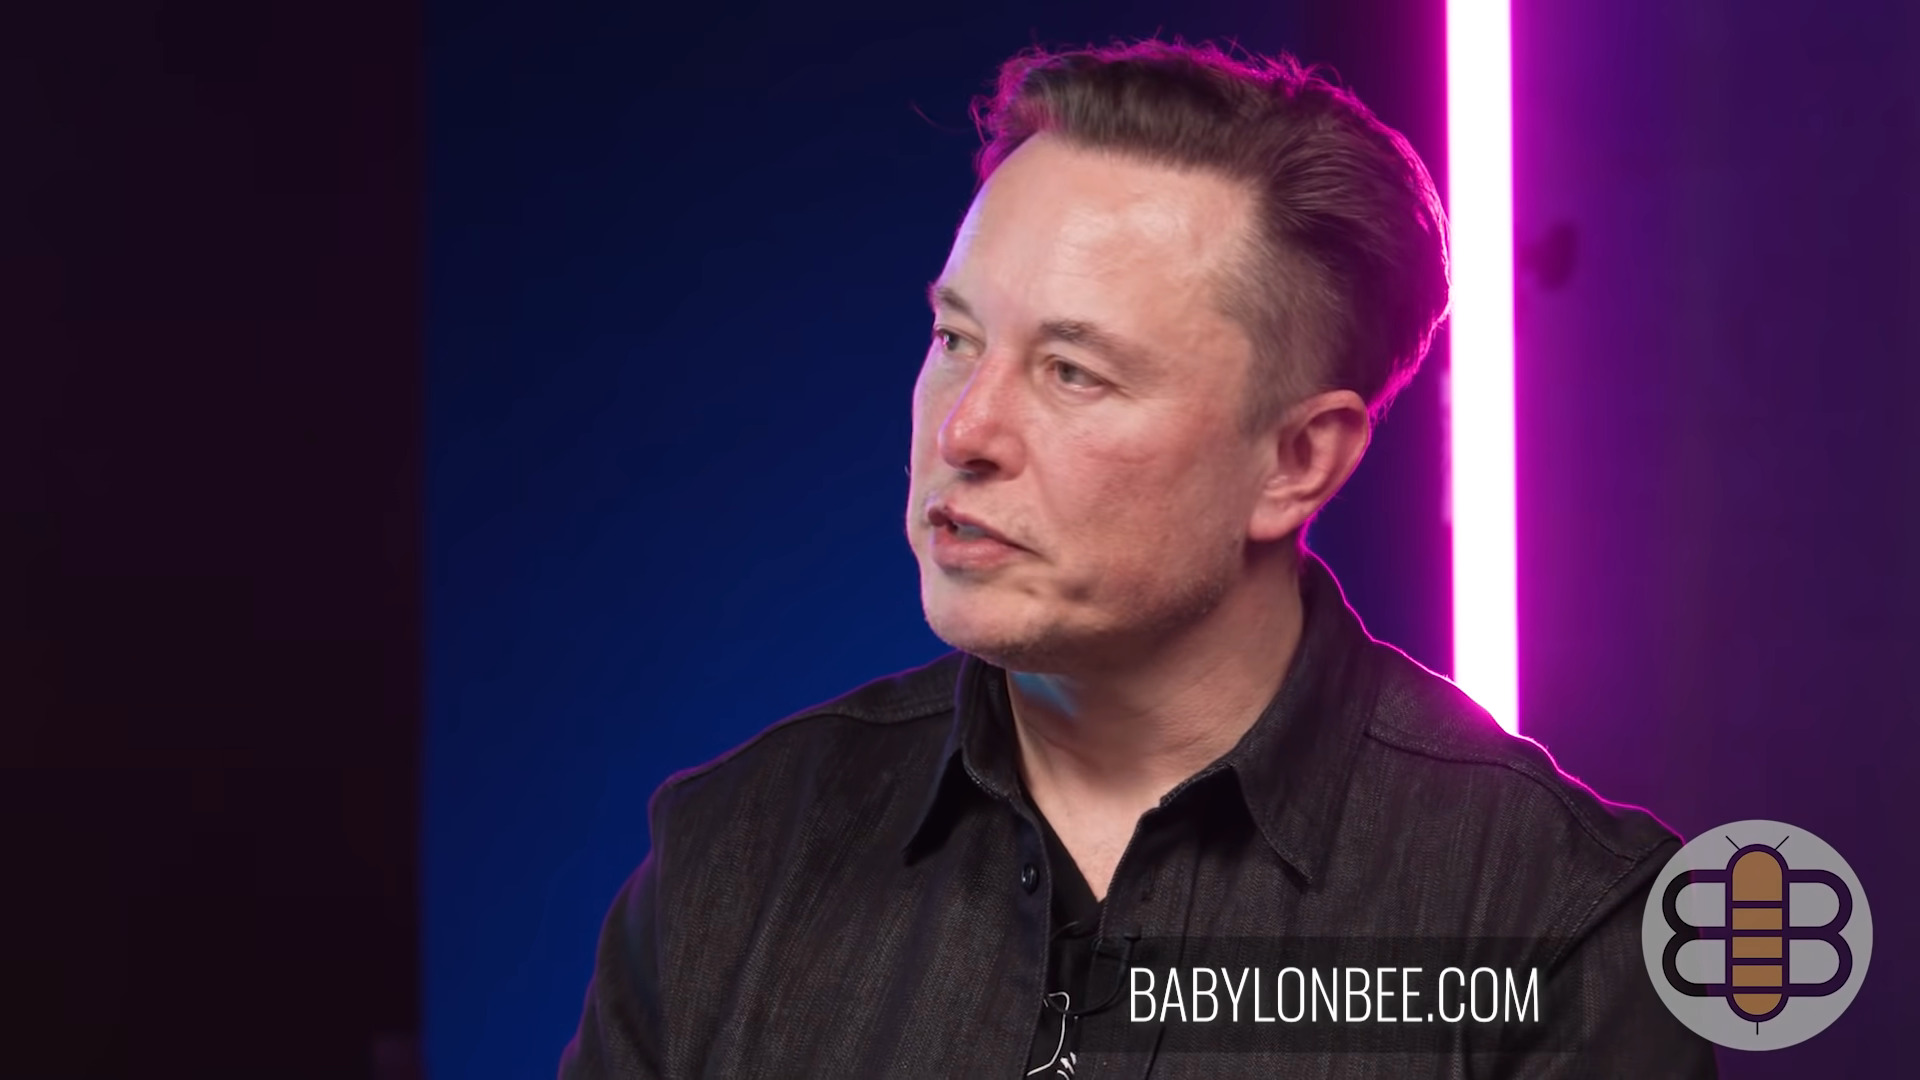 Elon Musk sits down with The Babylon Bee via The Babylon Bee, YouTube